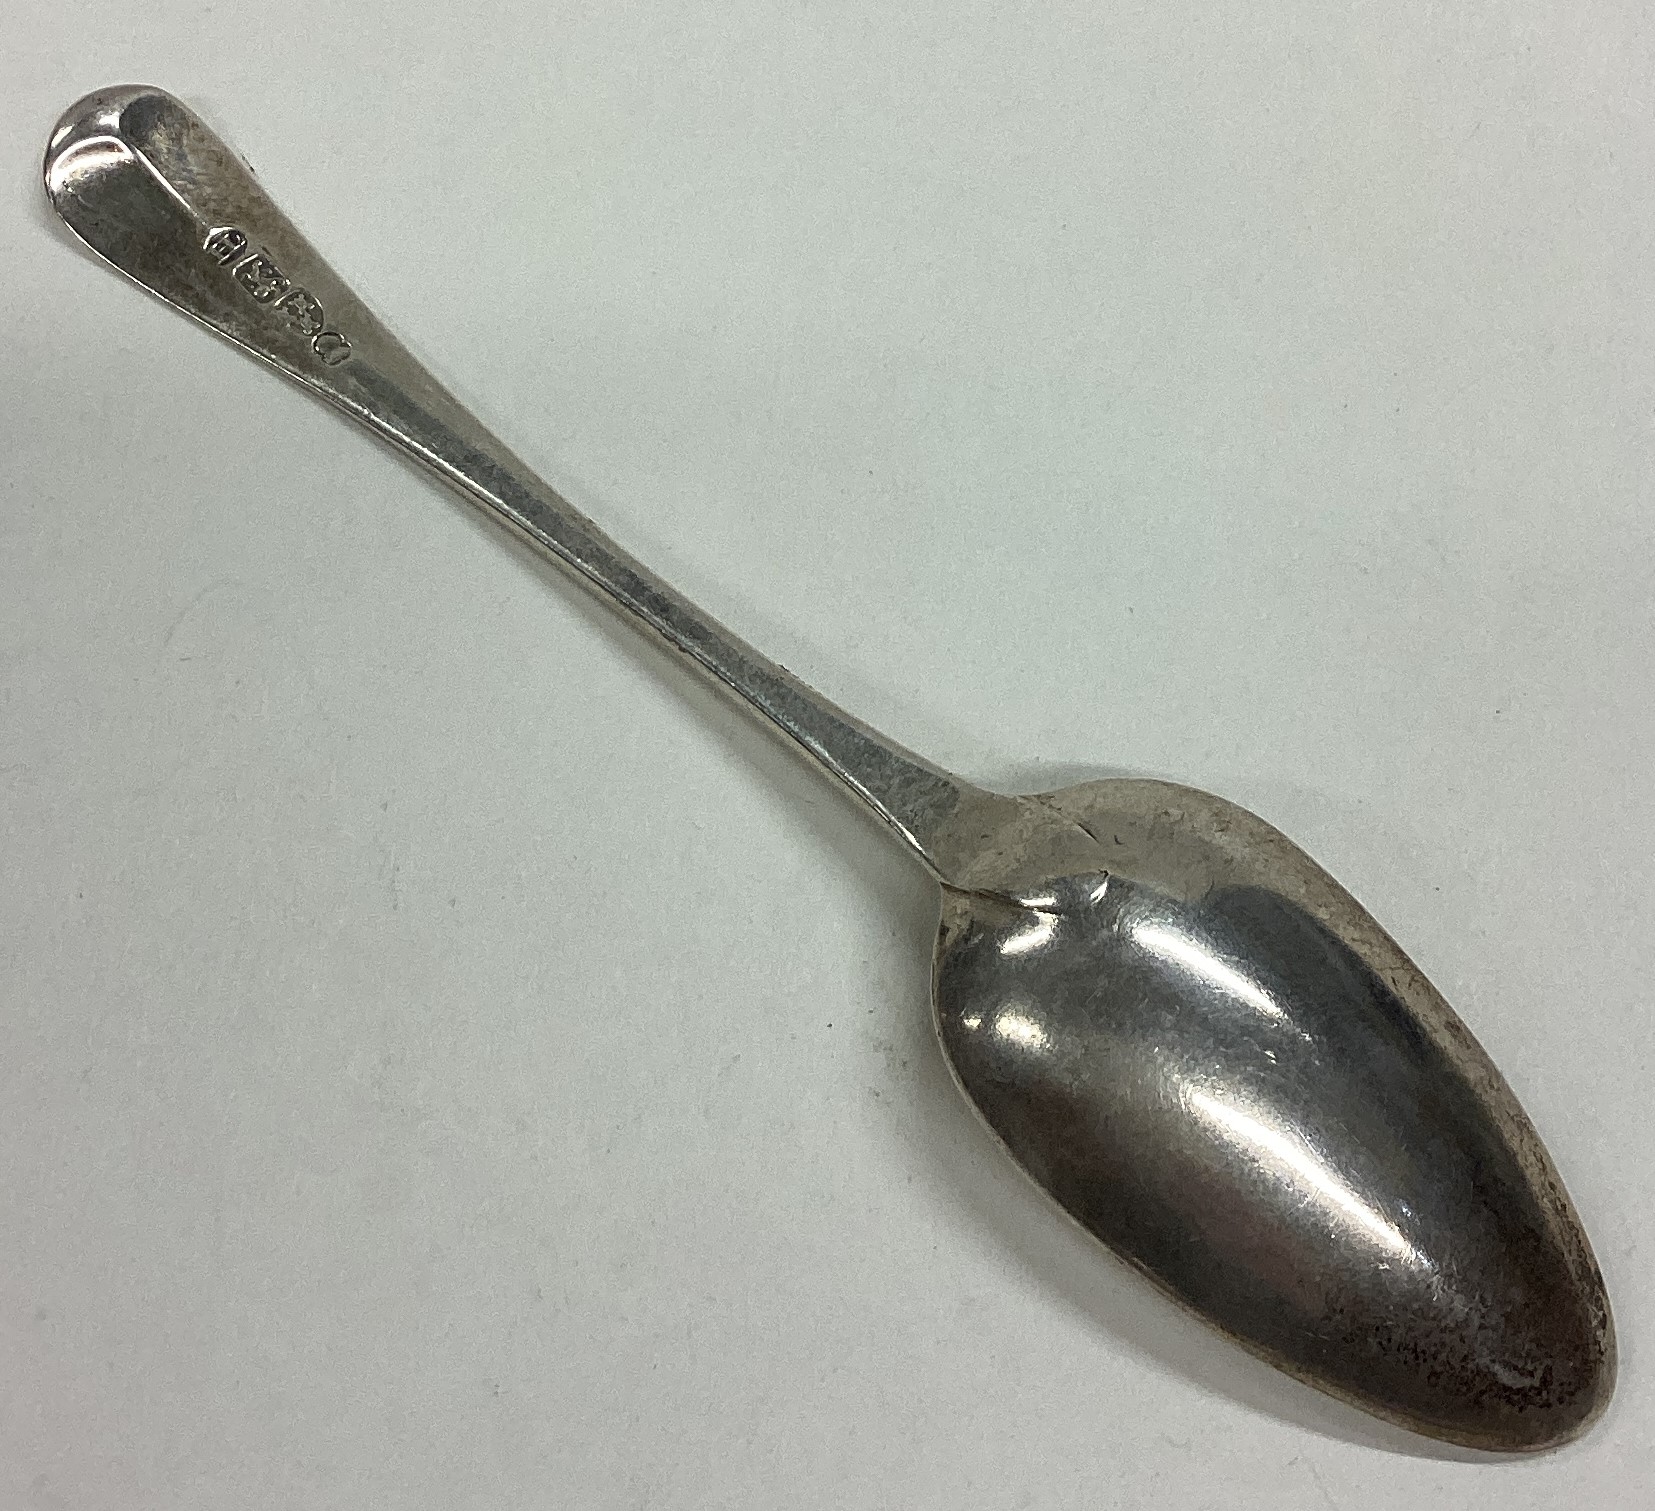 NEWCASTLE: A silver spoon. Circa 1800. - Image 2 of 3